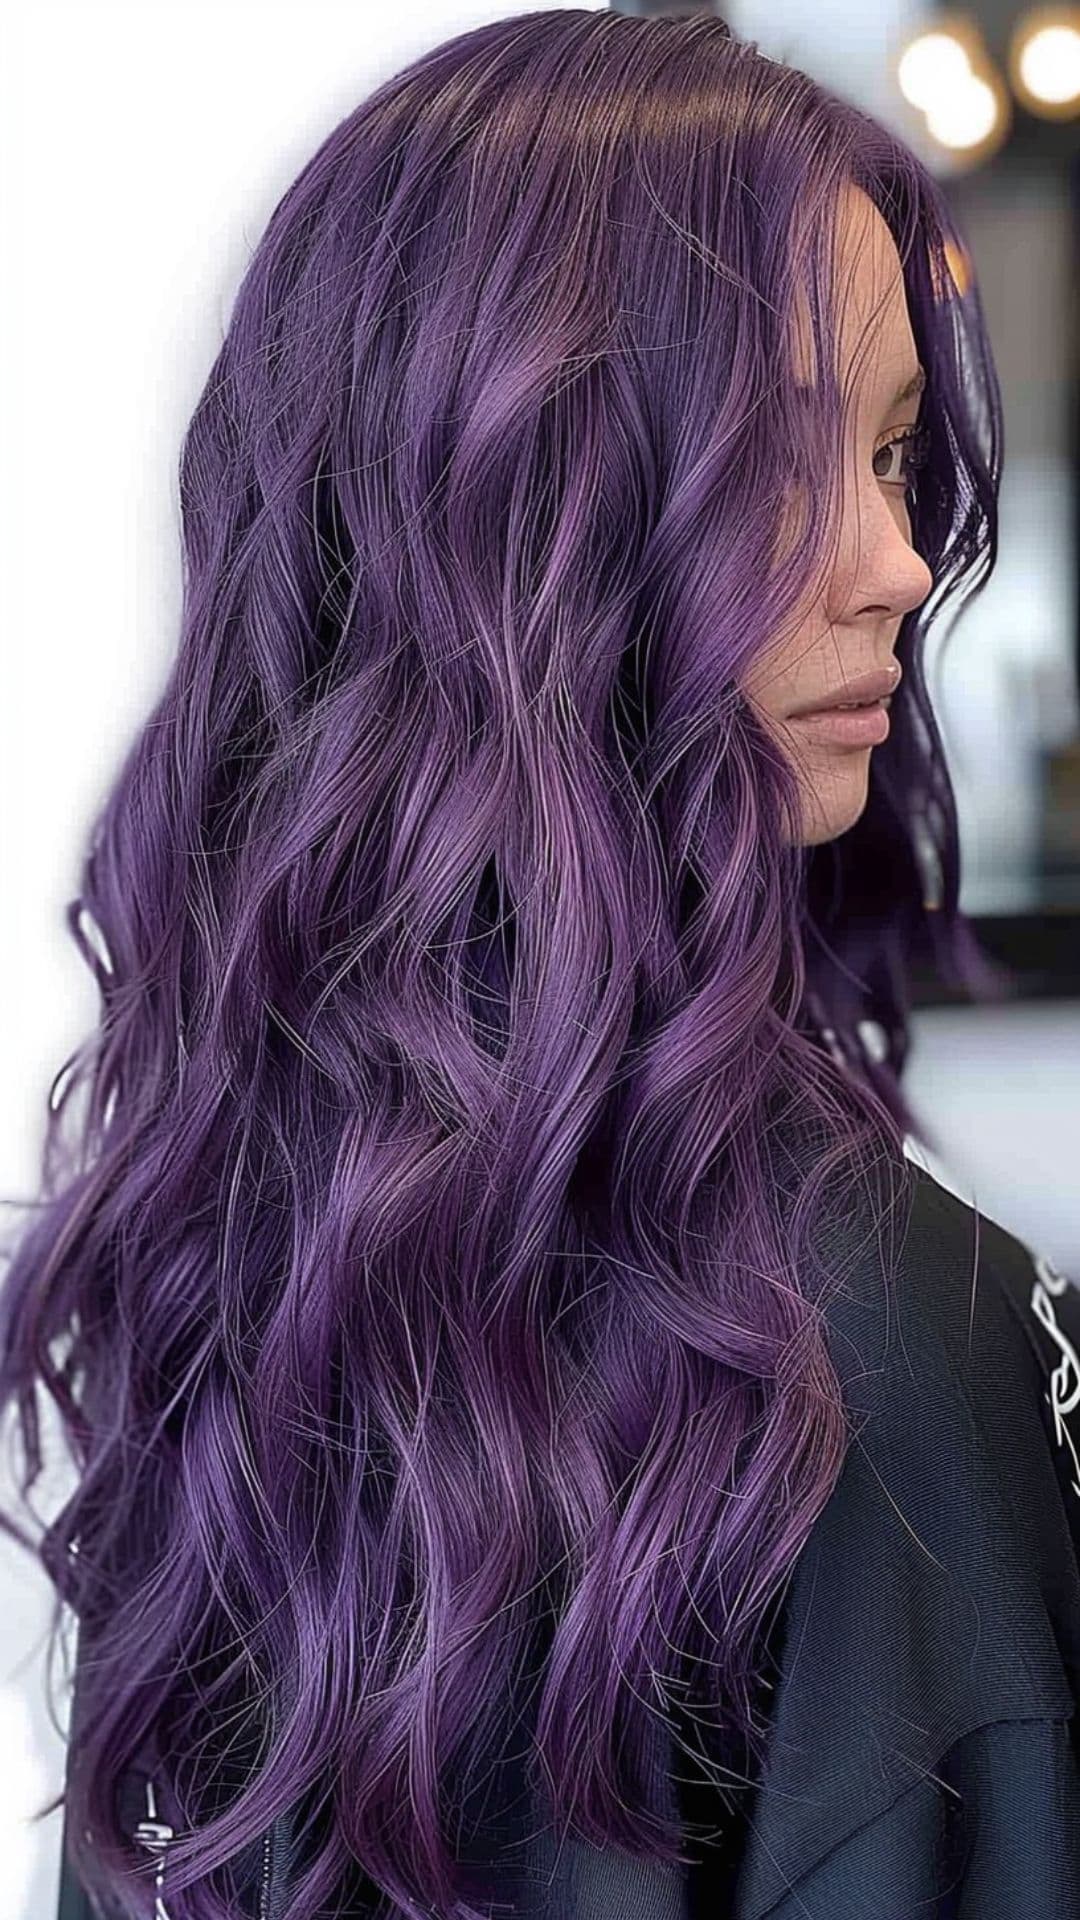 A woman modelling a deep purple hair.